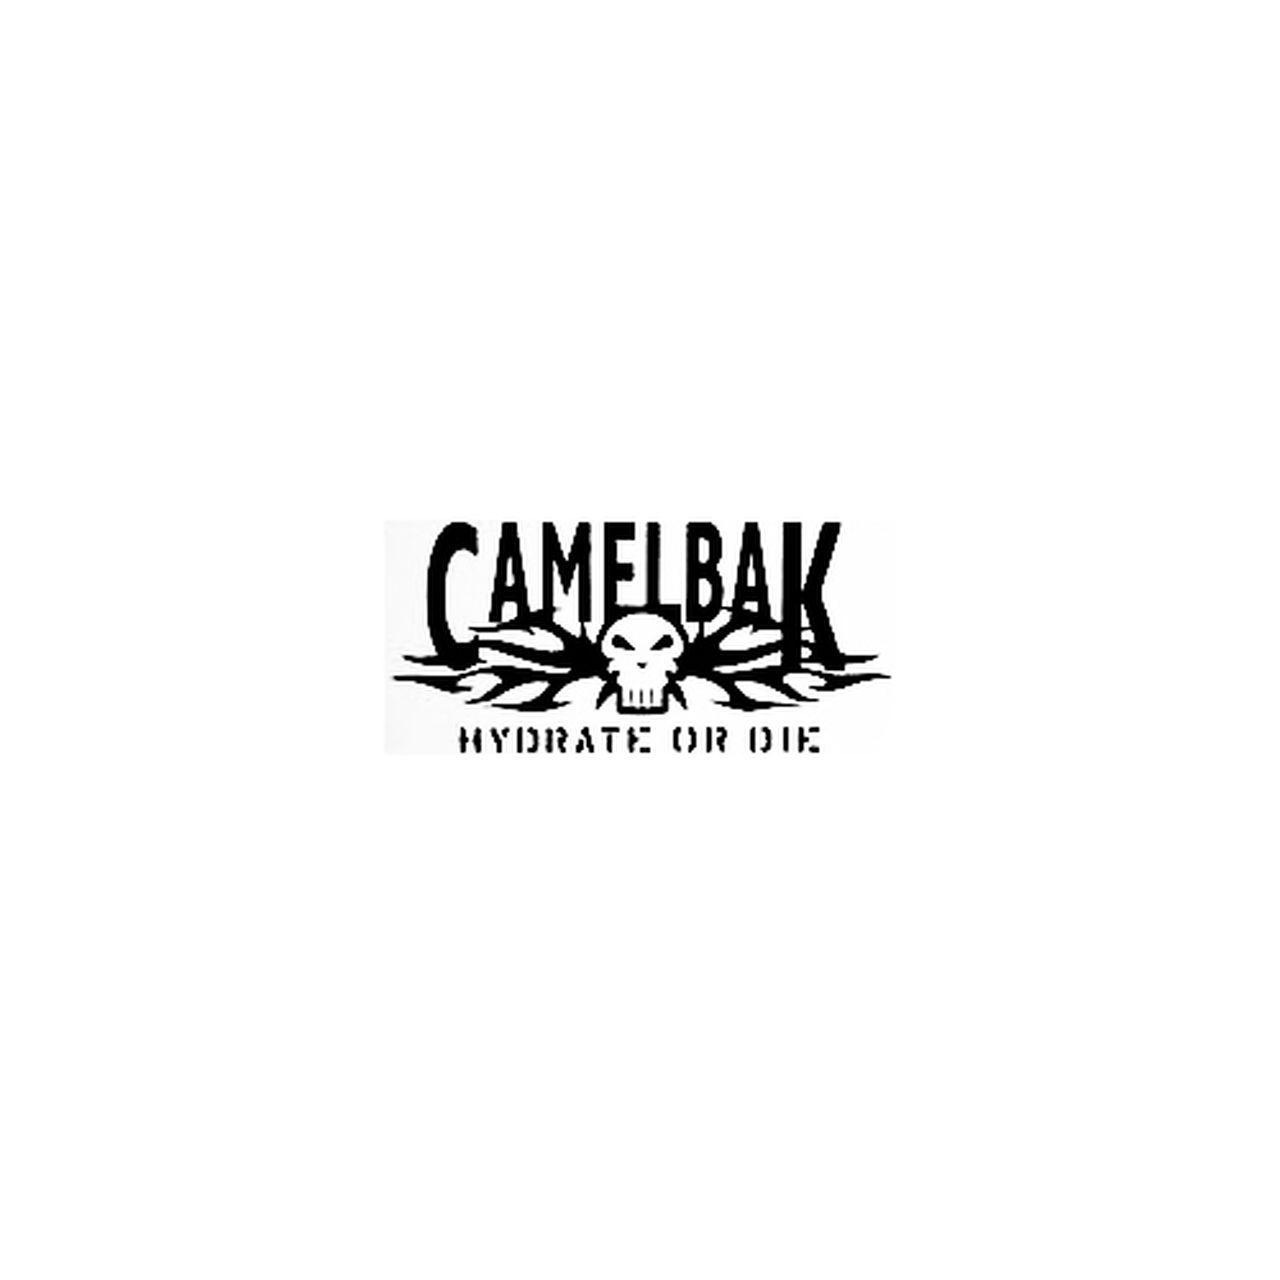 CamelBak Logo - Camelbak Hydrate Or Die Logo Vinyl Decal